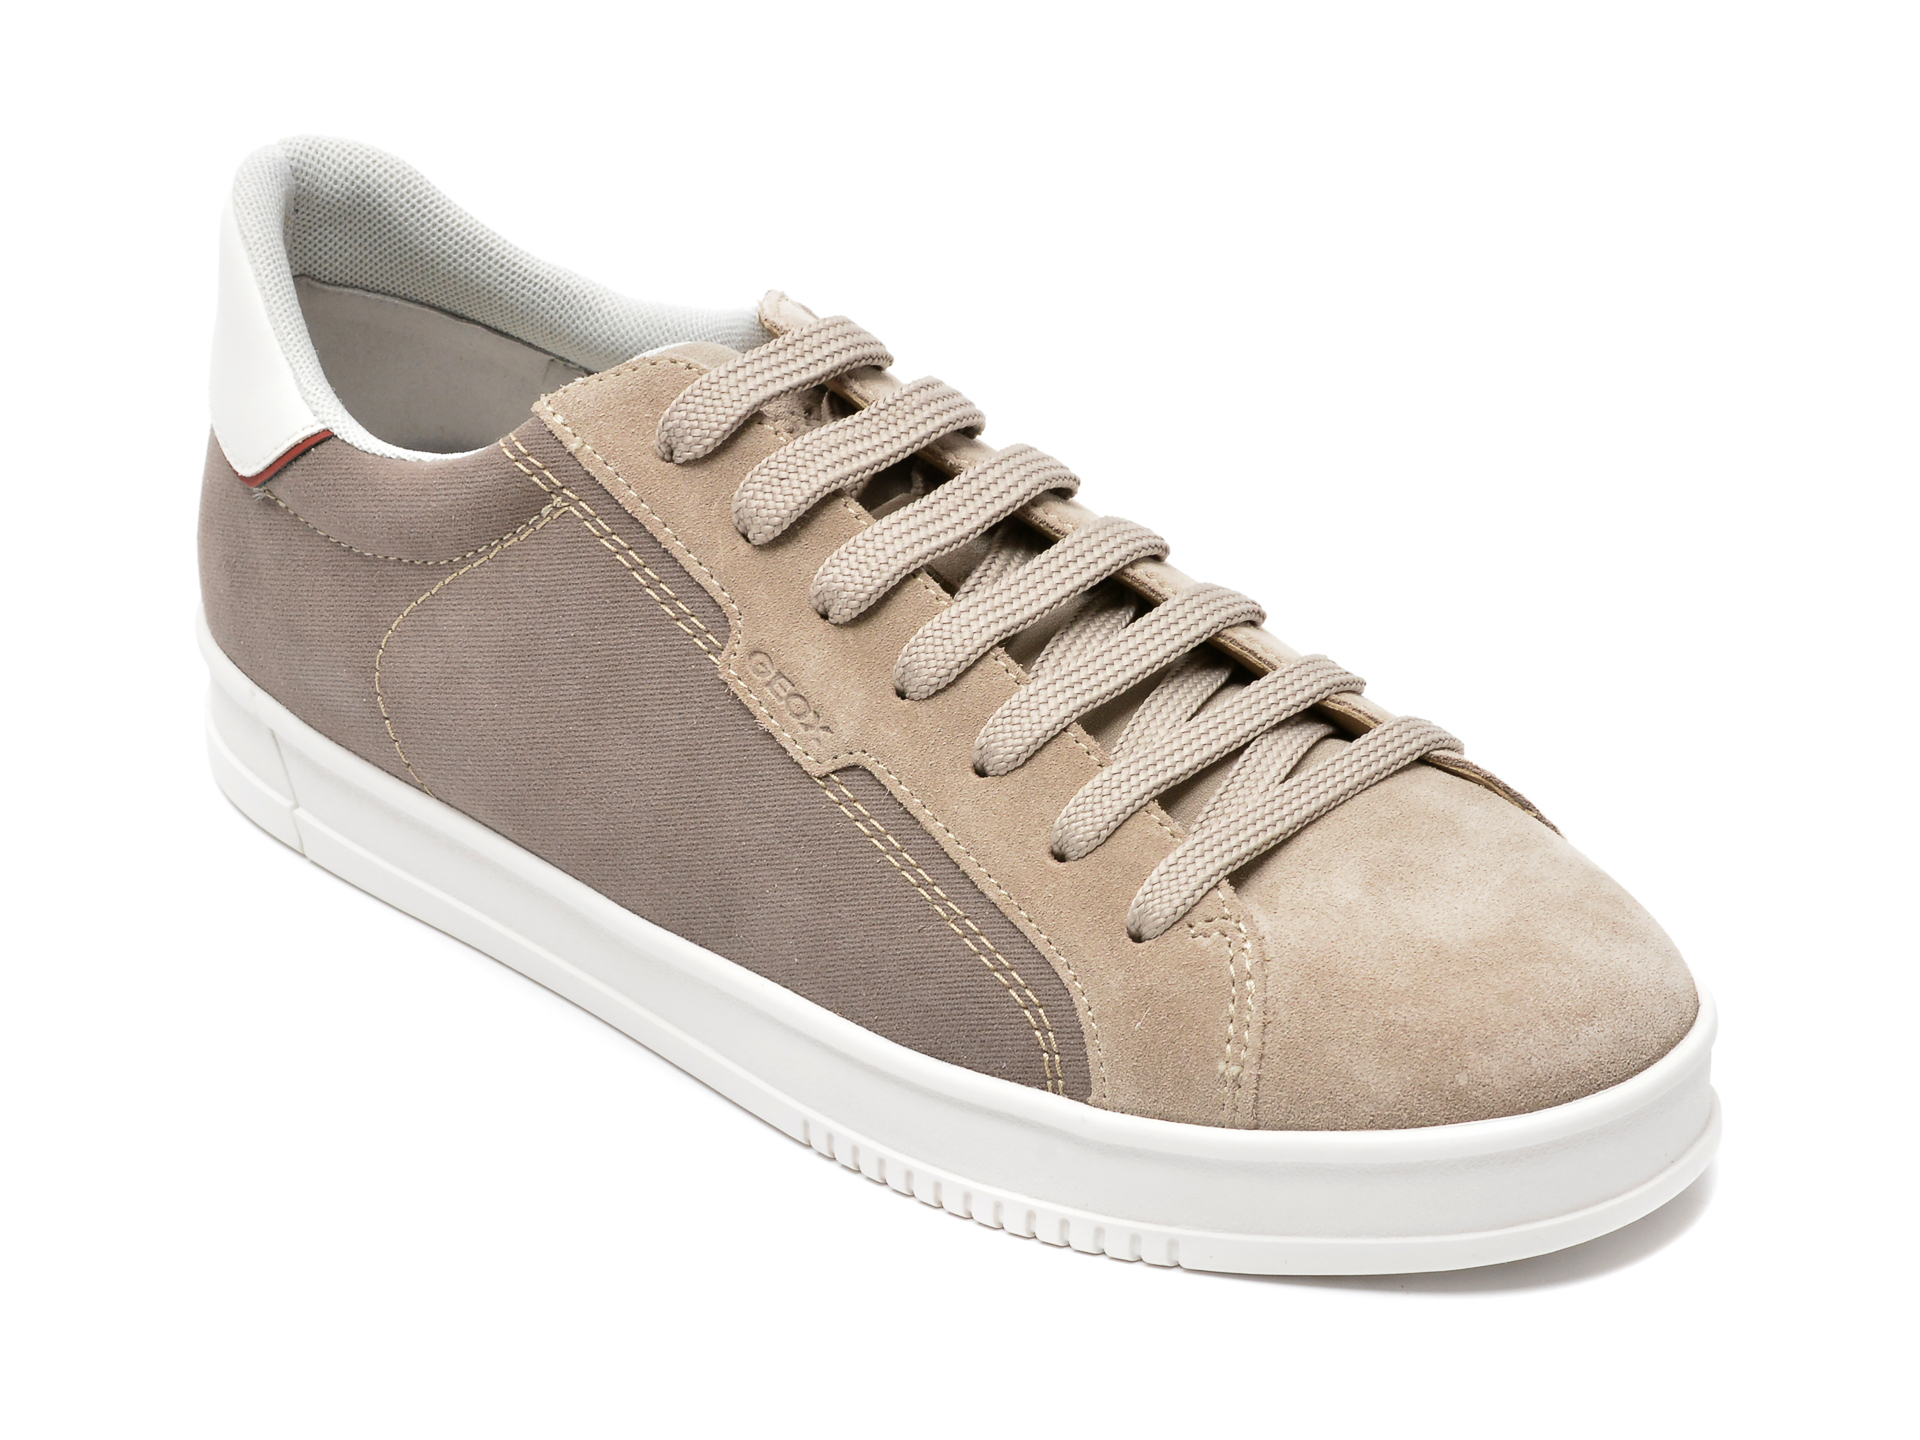 Pantofi sport GEOX gri, U25ETB, din material textil si piele naturala Geox